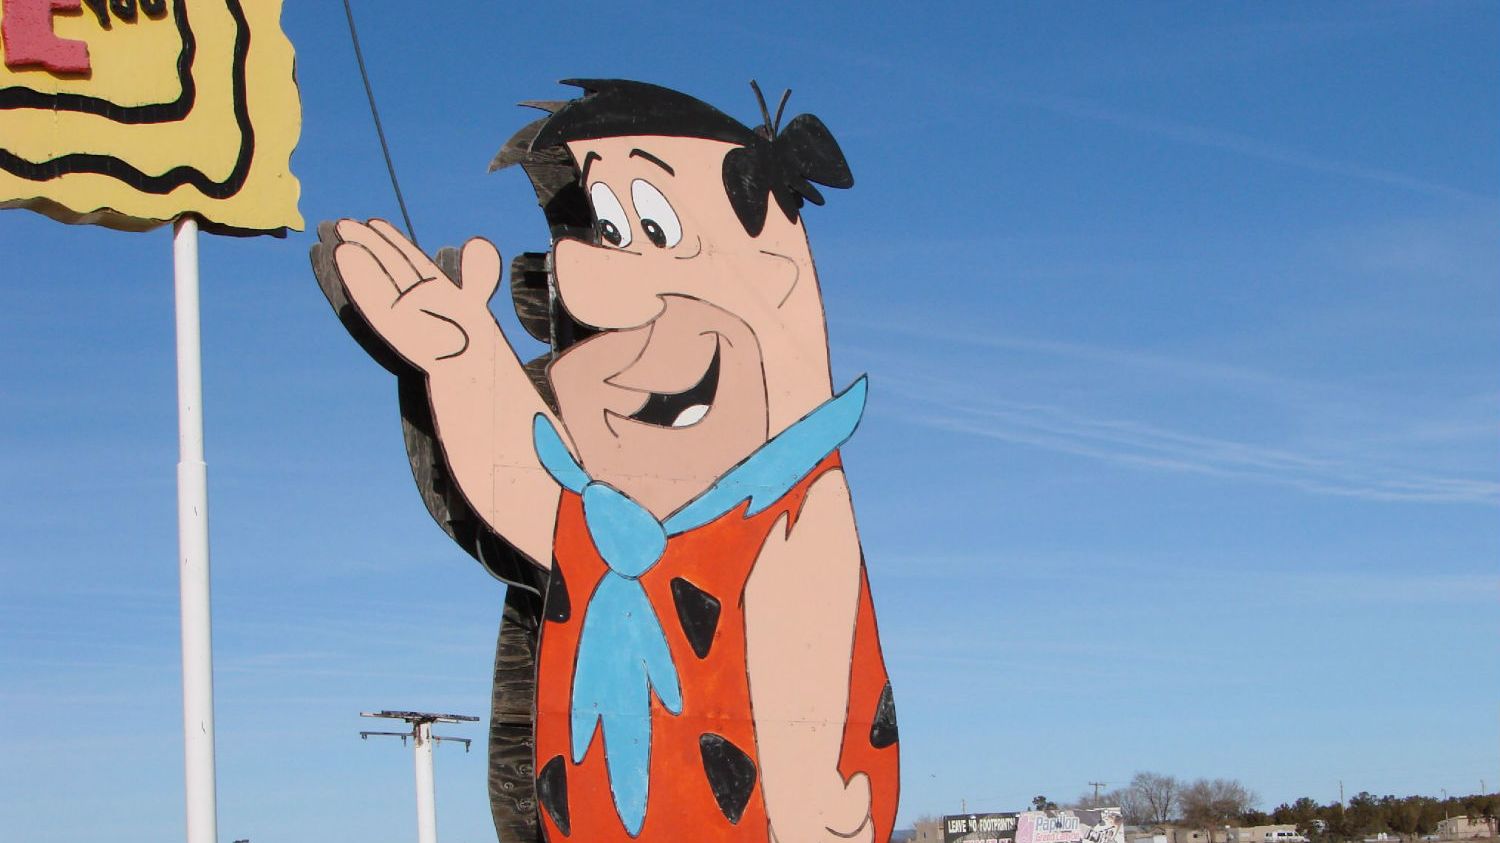 You Can Still Visit This Forgotten Flintstones Theme Park In Arizona